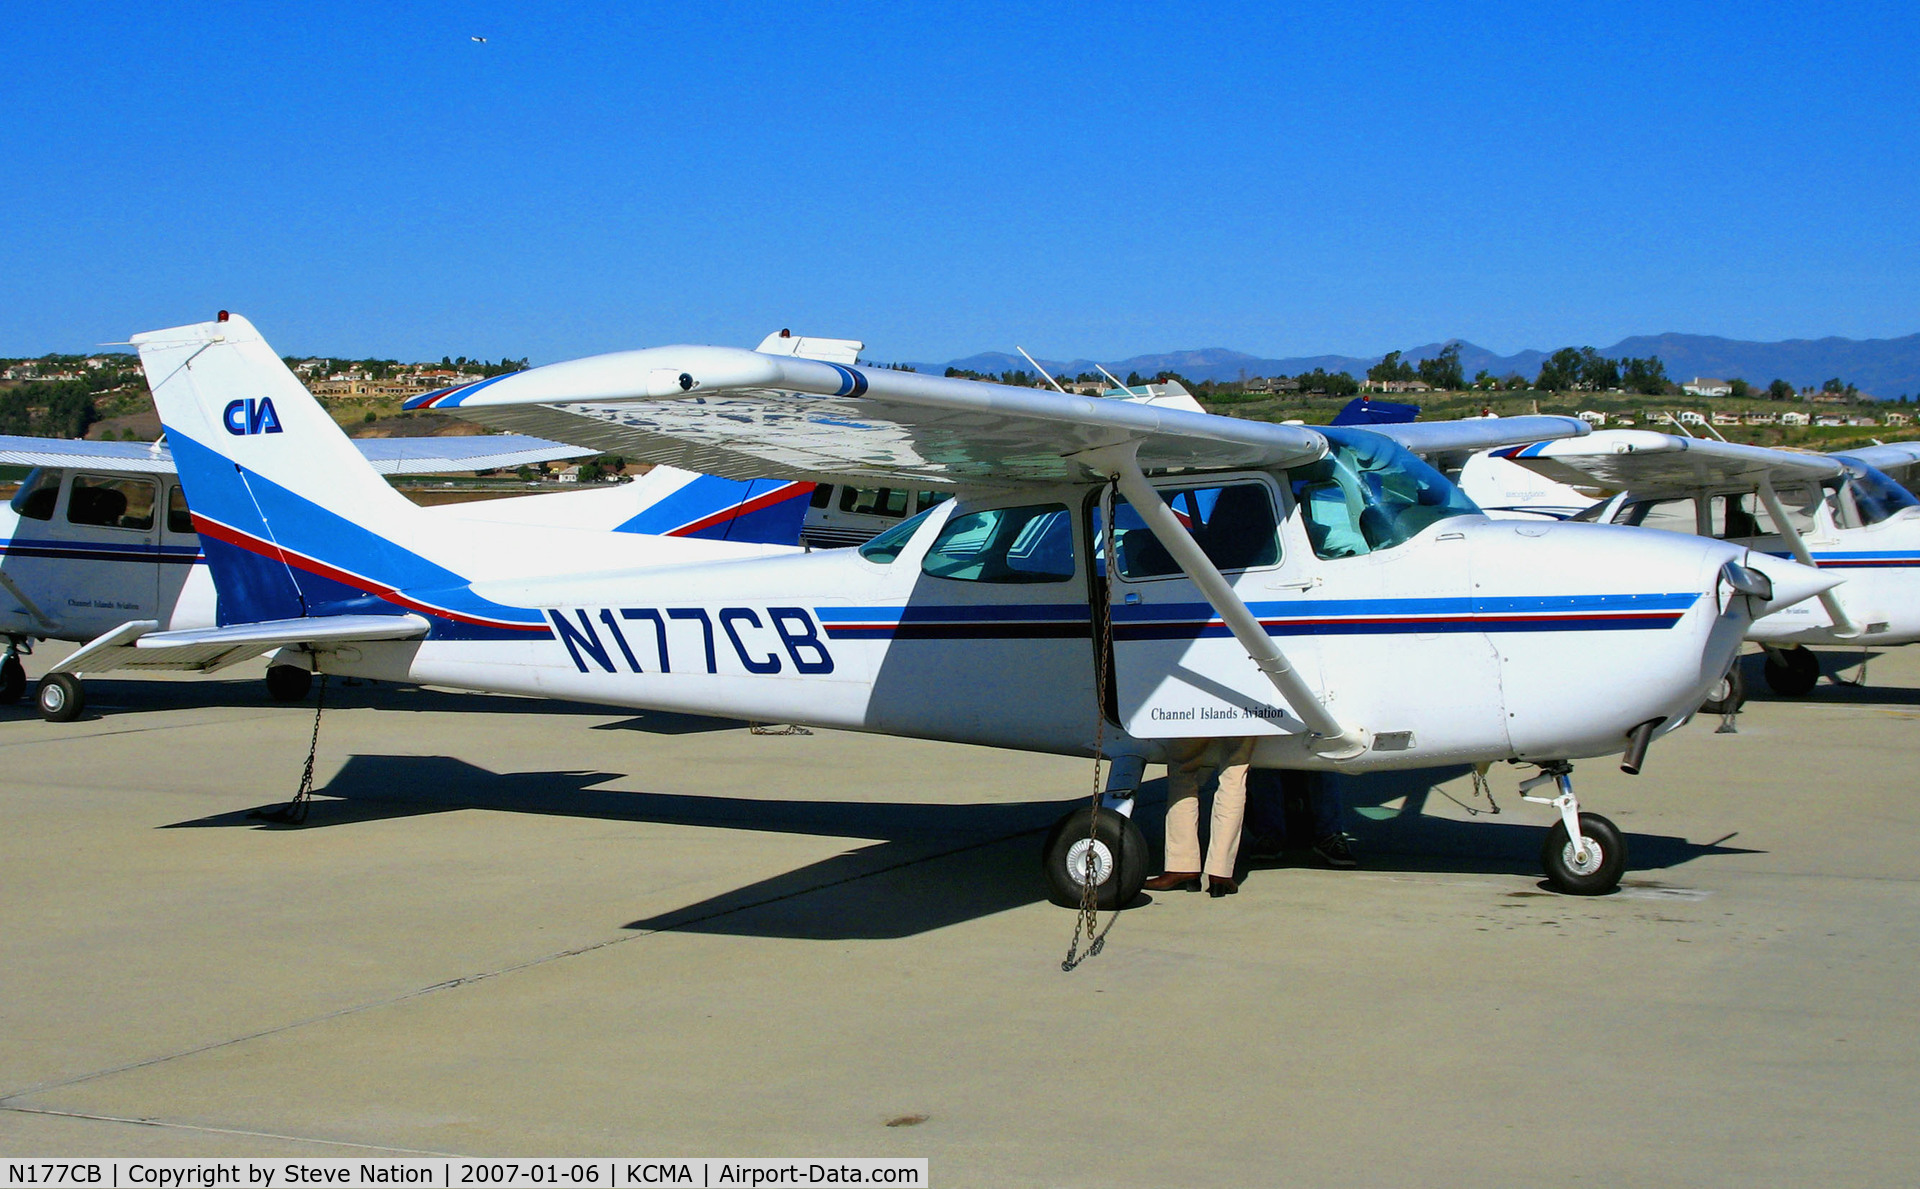 N177CB, 1980 Cessna 172P C/N 172-74204, Channel Islands Aviation/CIA (titles) 1980 Cessna 172P at Camarillo, CA (KCMA) home base